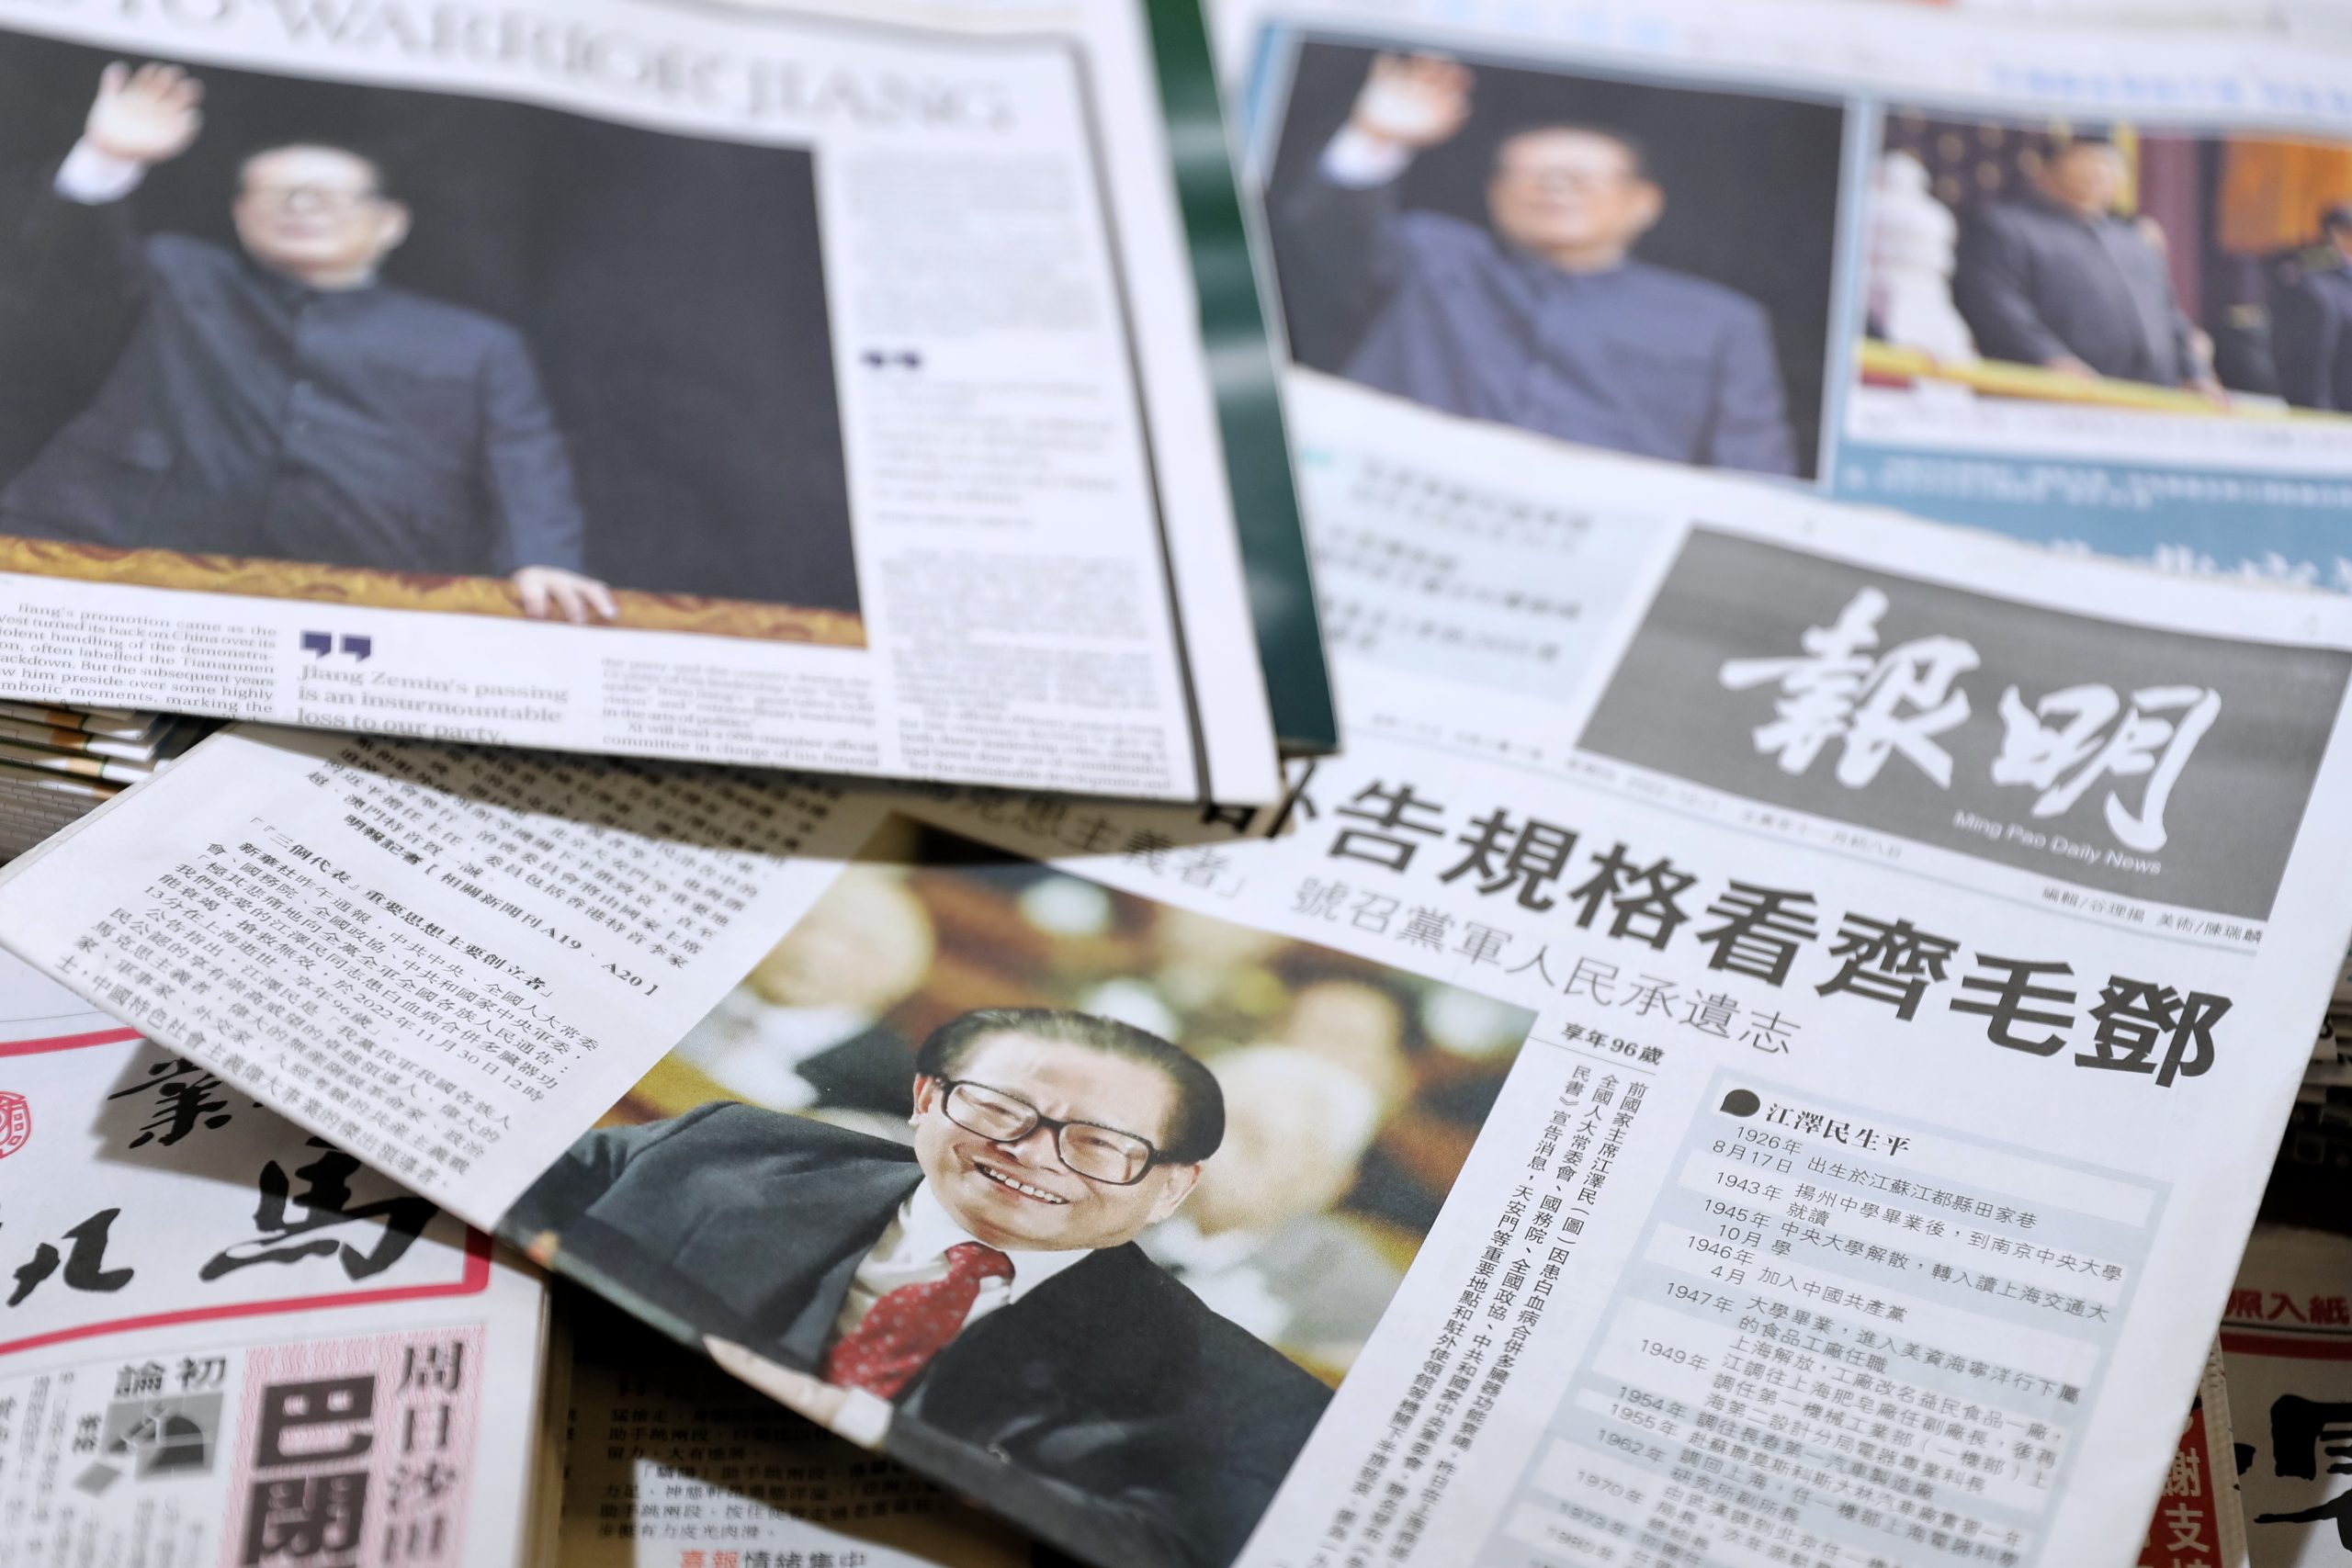 Liaison Office Jiang Zemin death